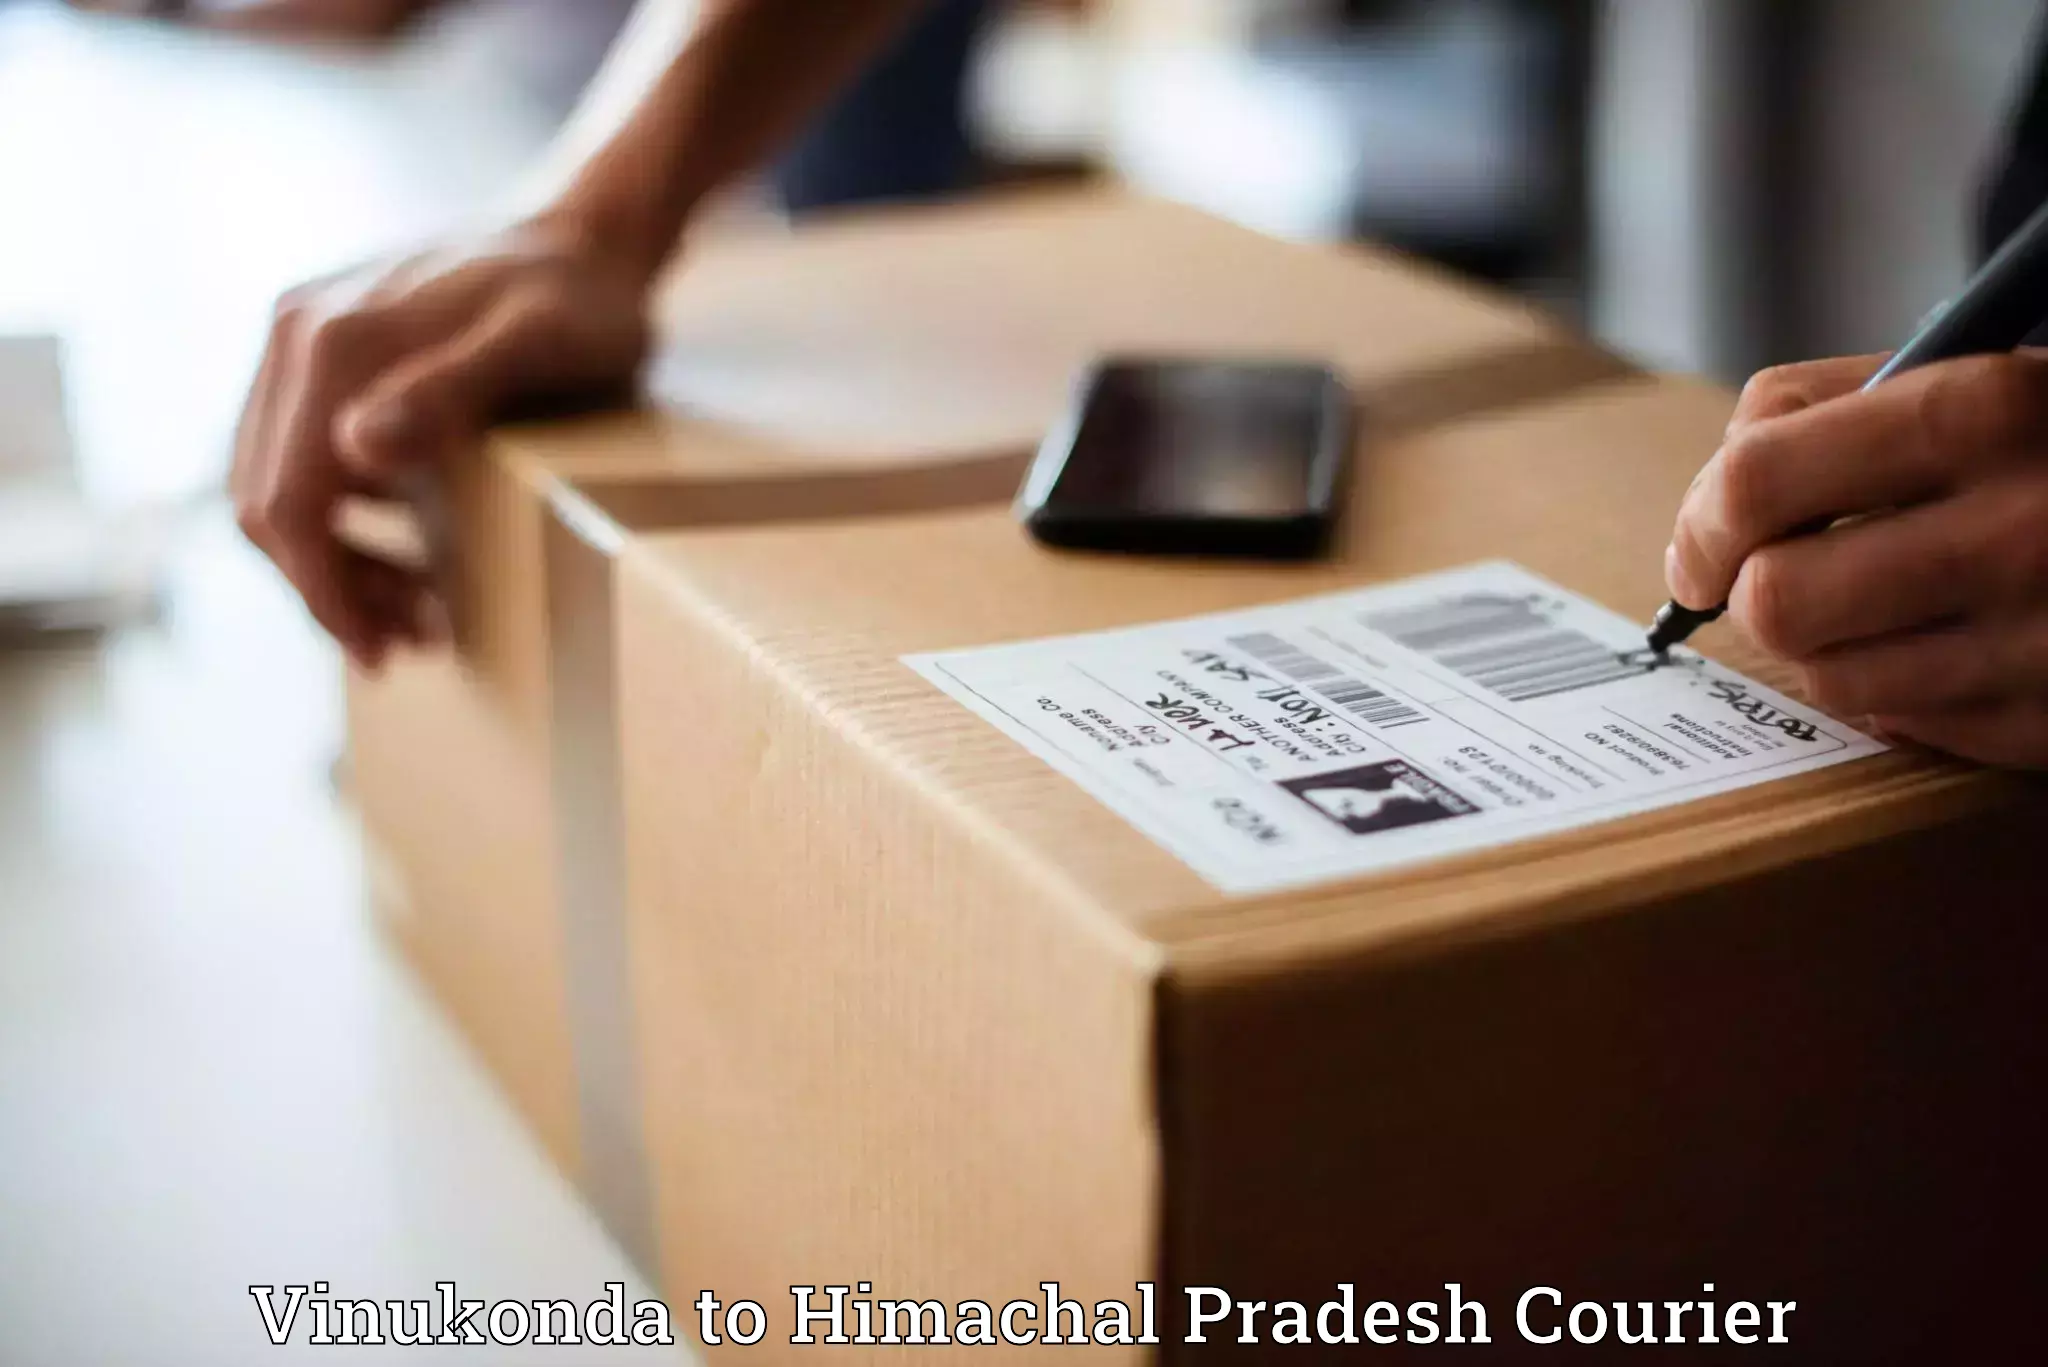 Same-day delivery solutions Vinukonda to Baddi